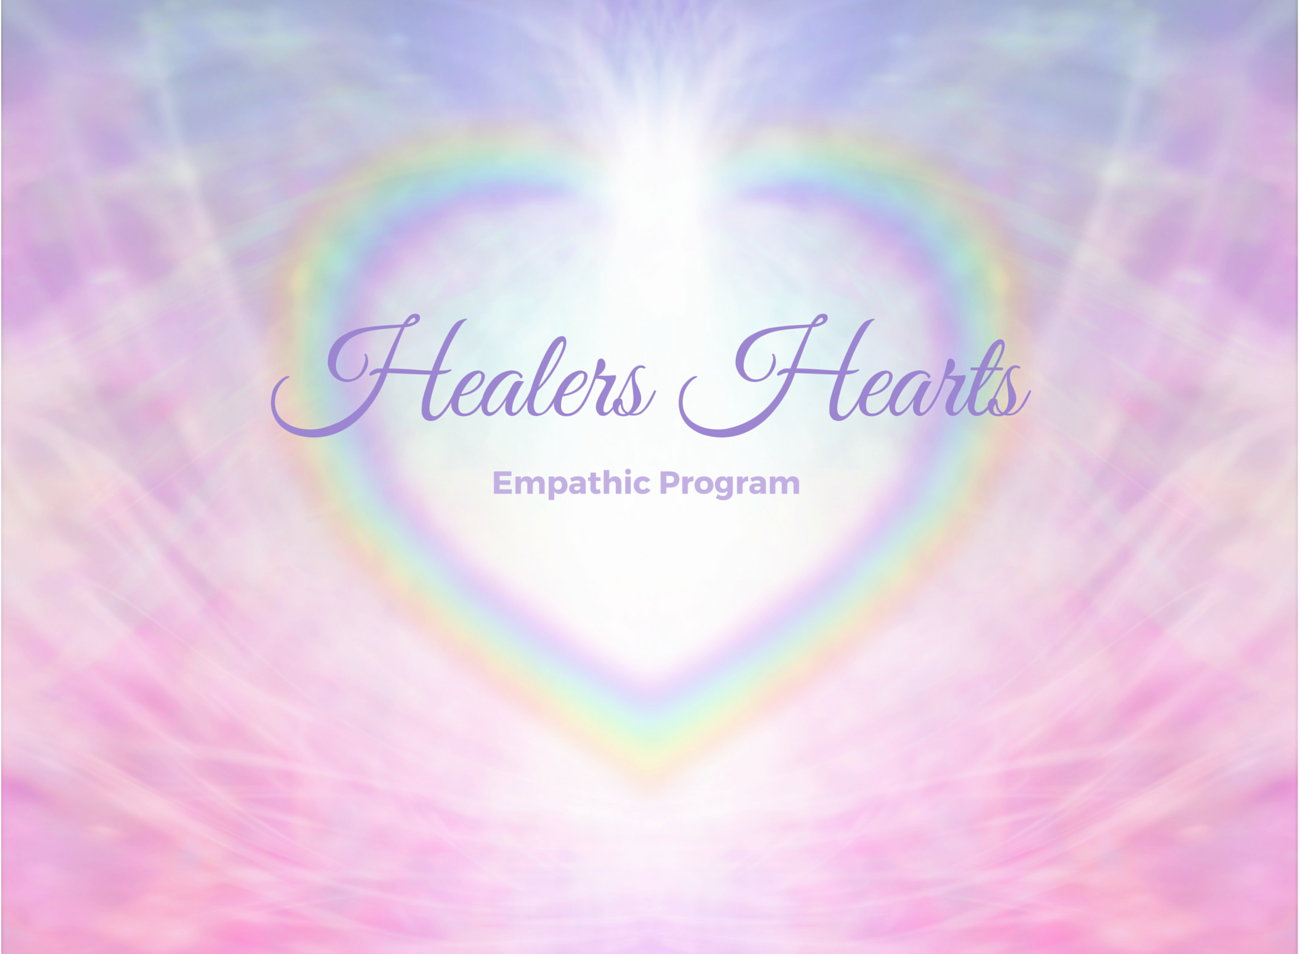 Healer's Hearts